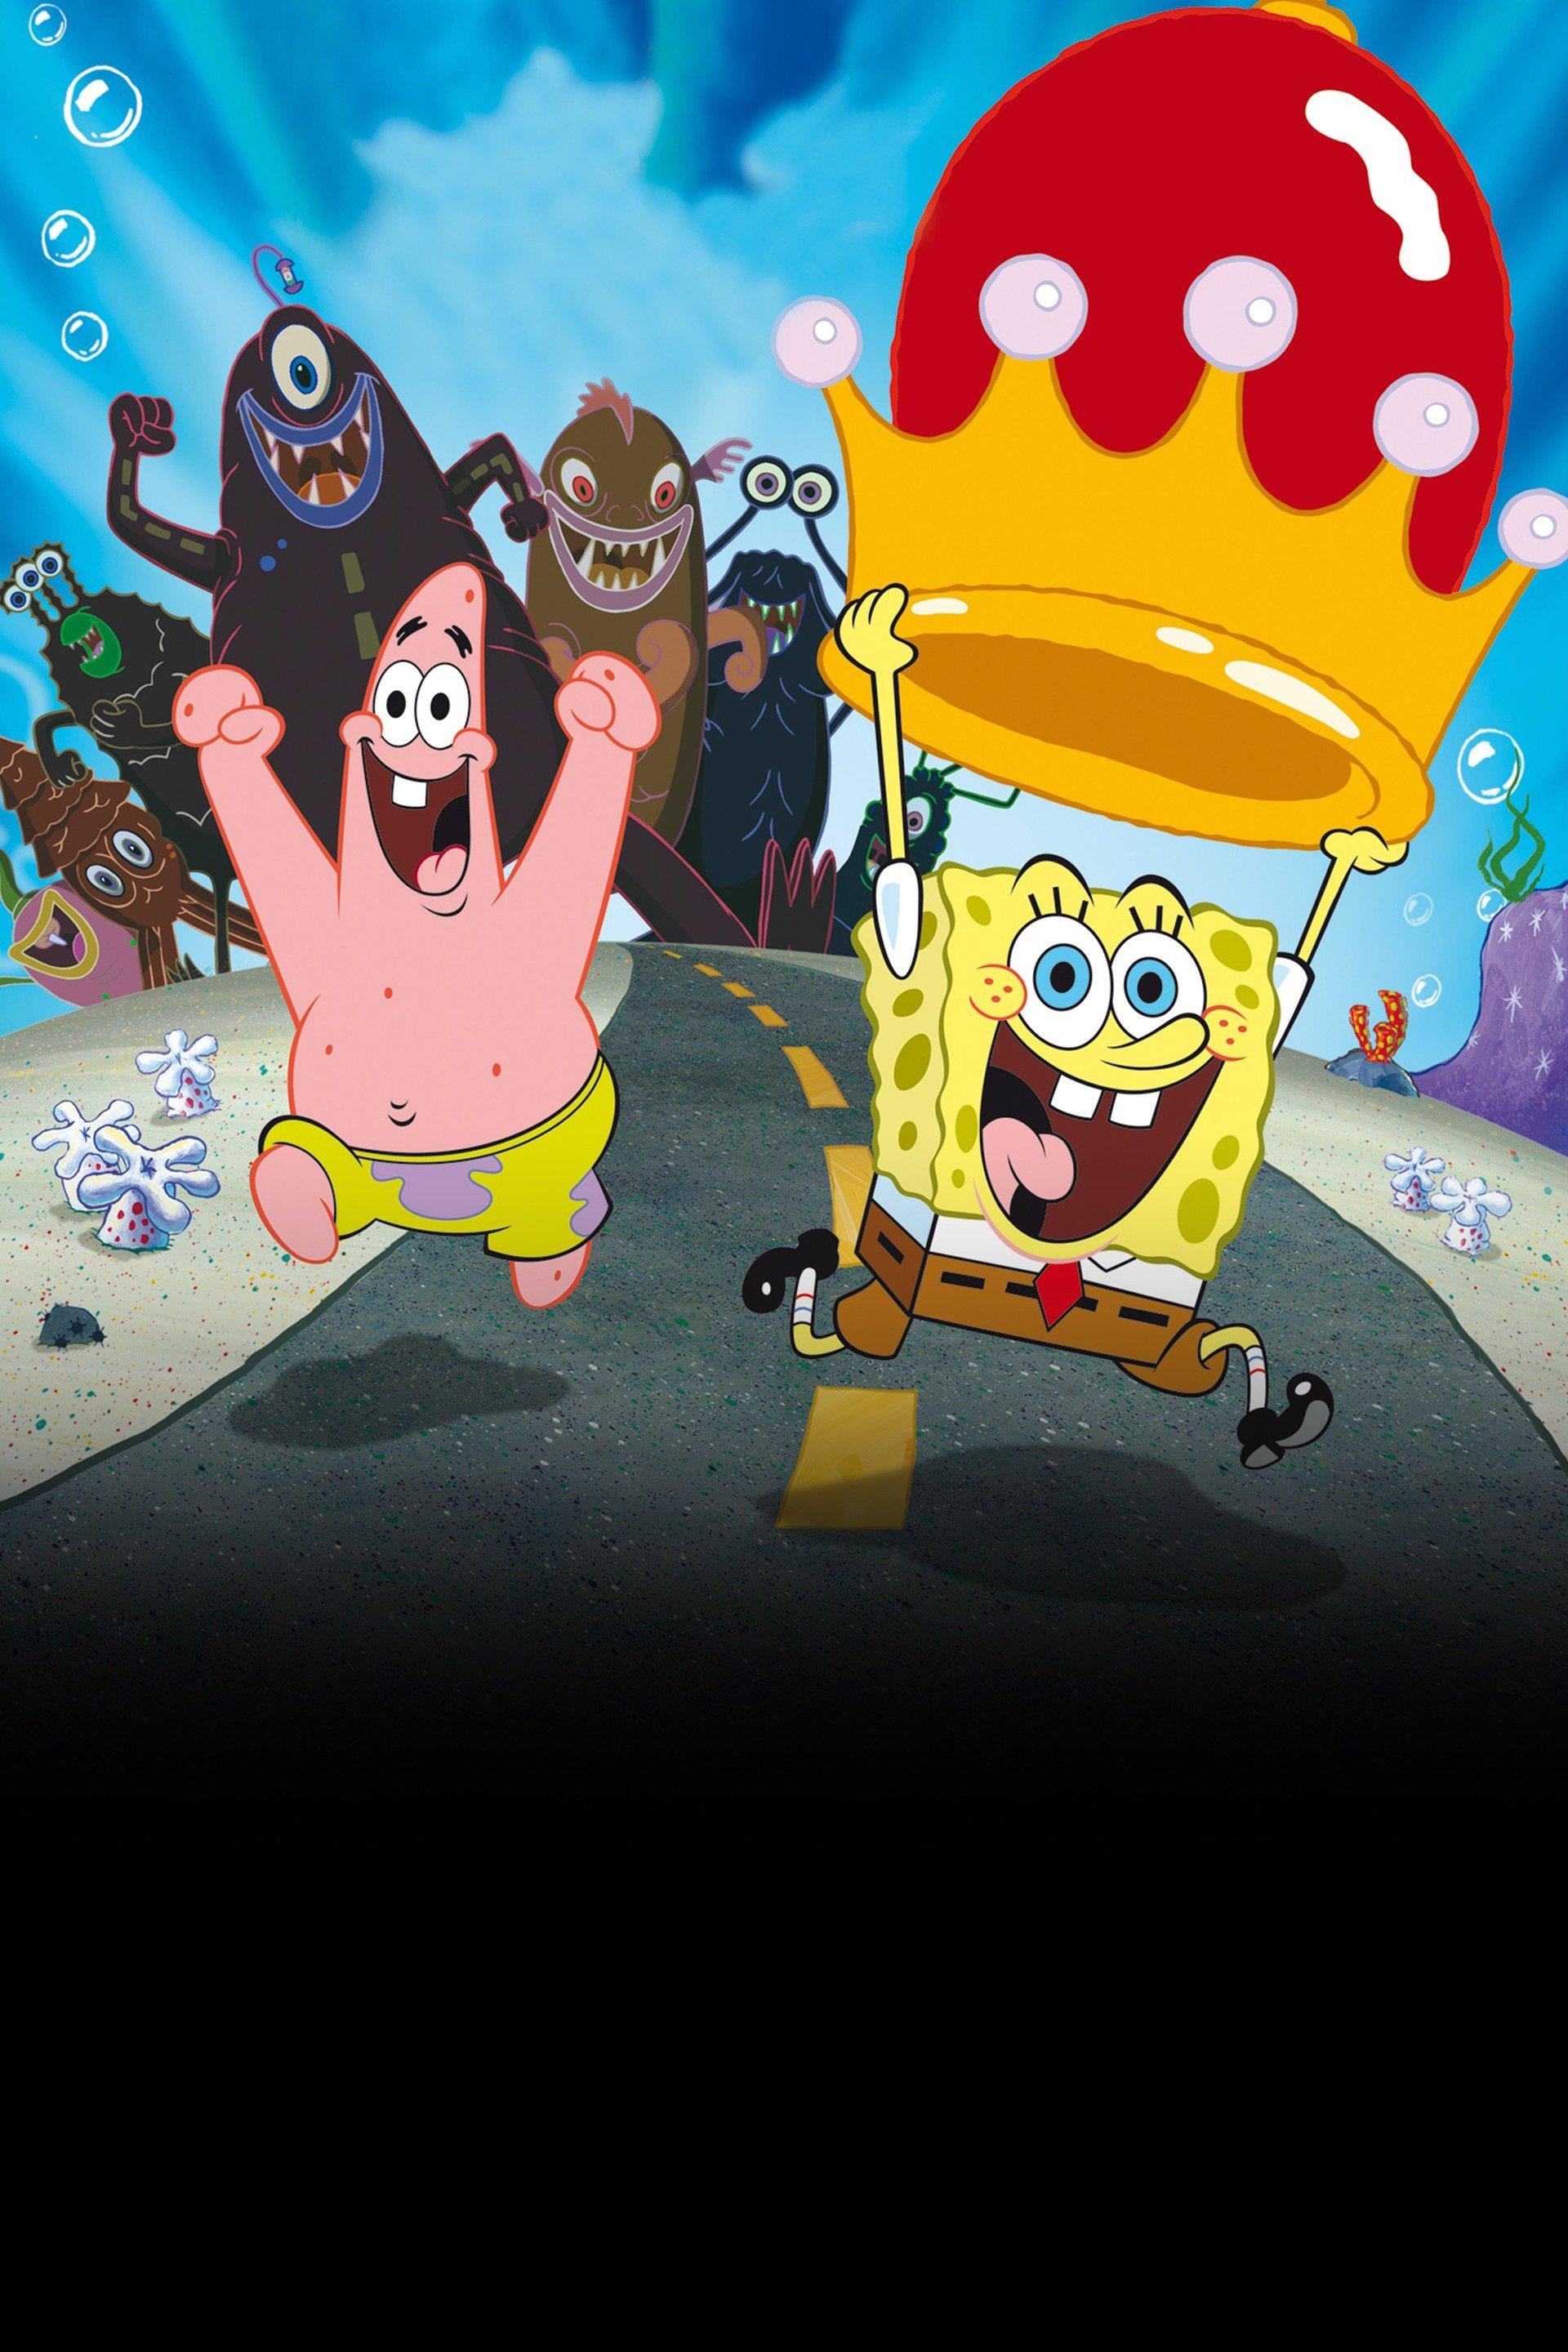 SpongeBob SquarePants Official - YouTube